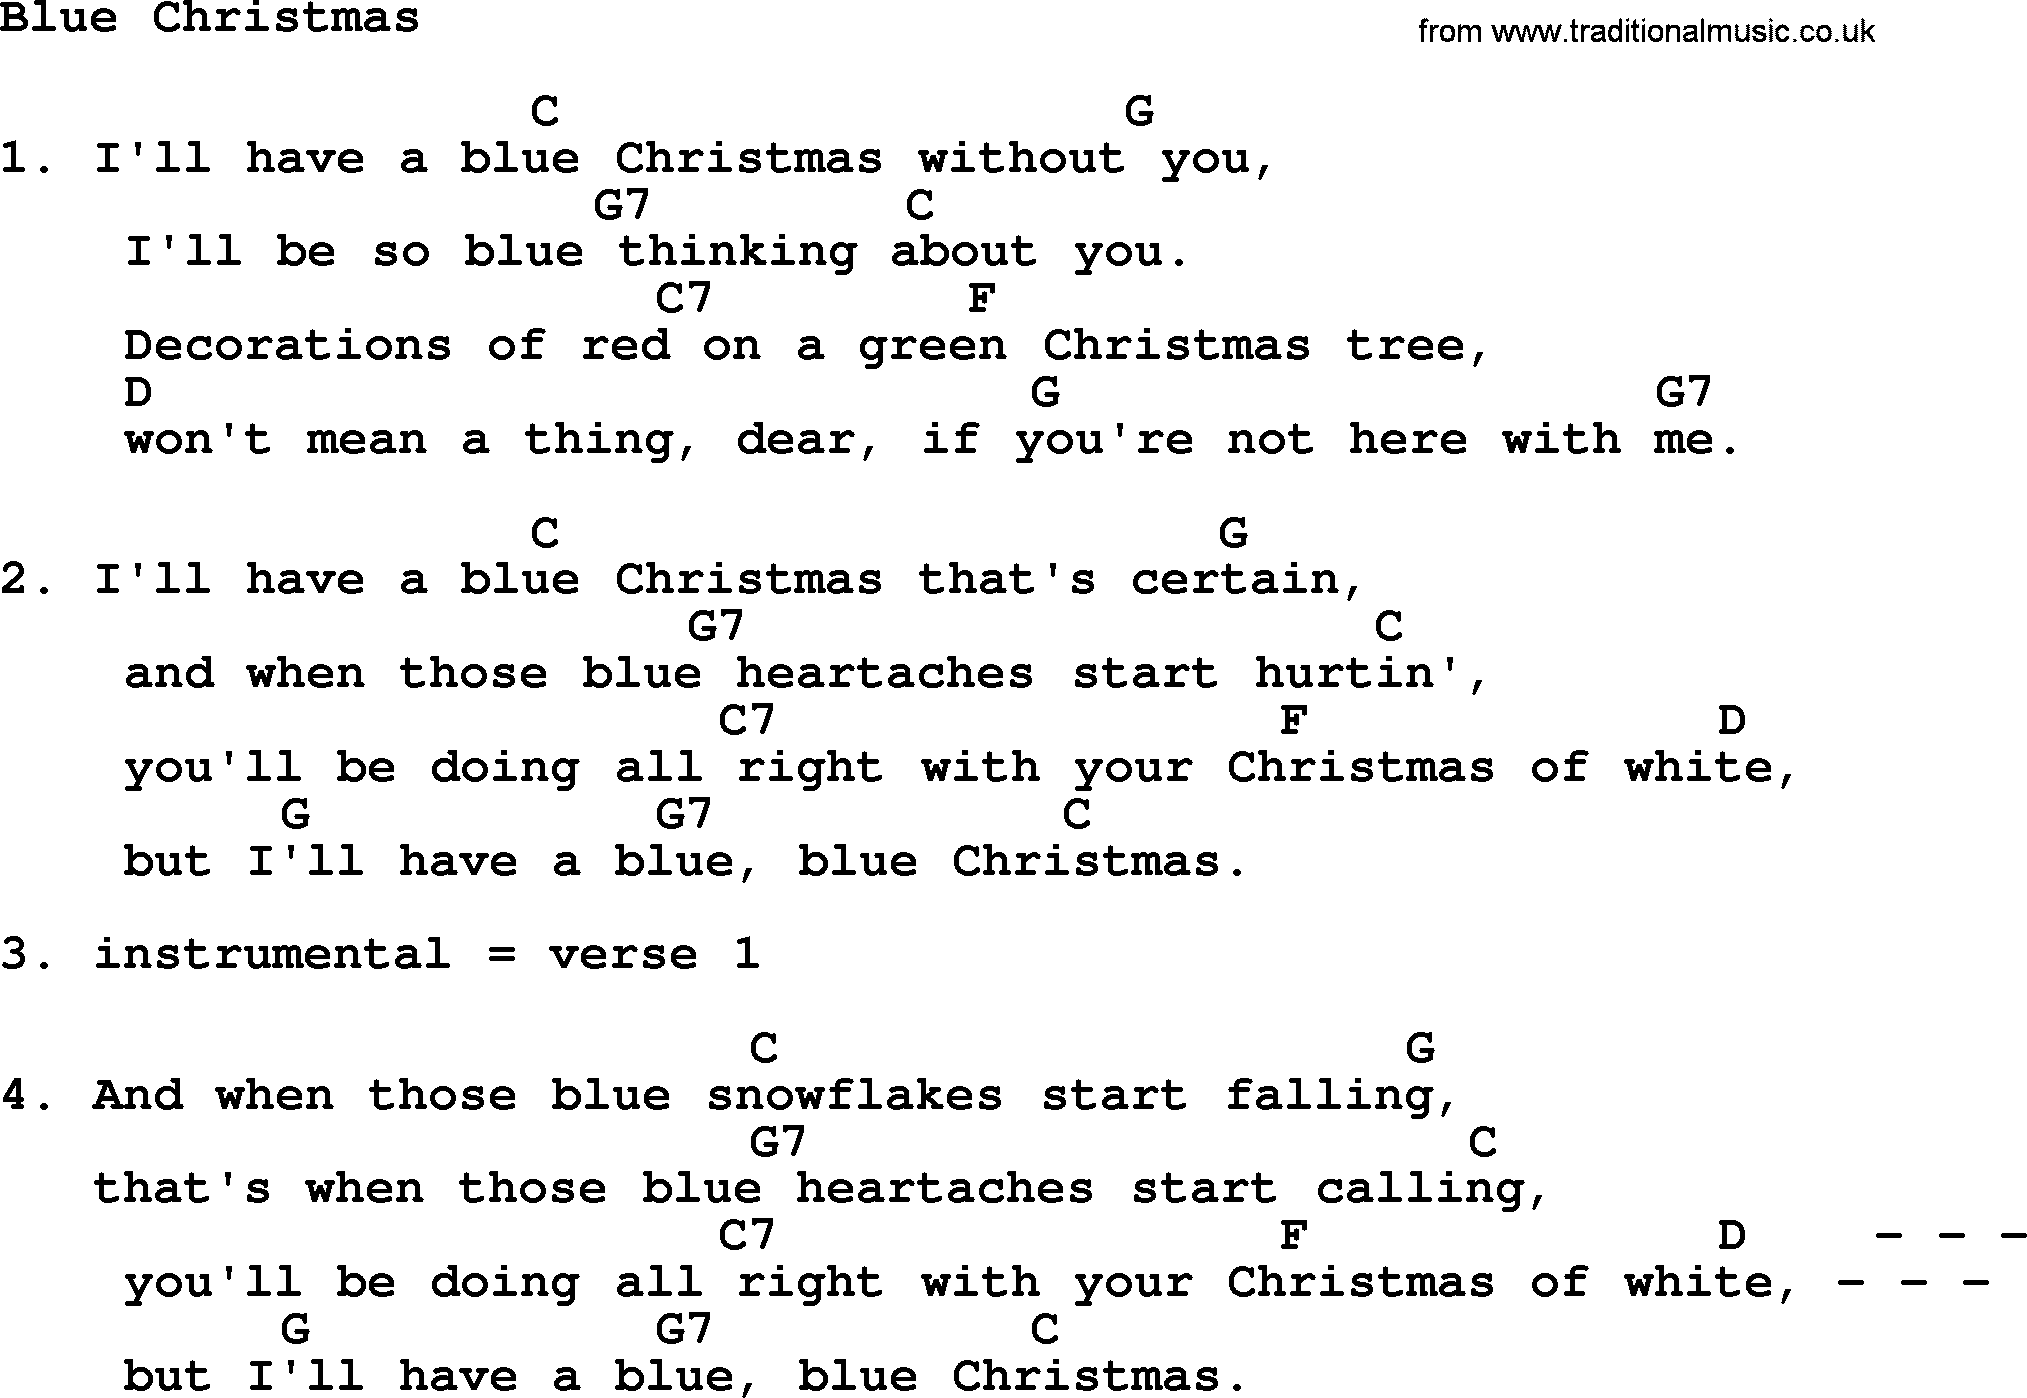 Loretta Lynn song: Blue Christmas lyrics and chords